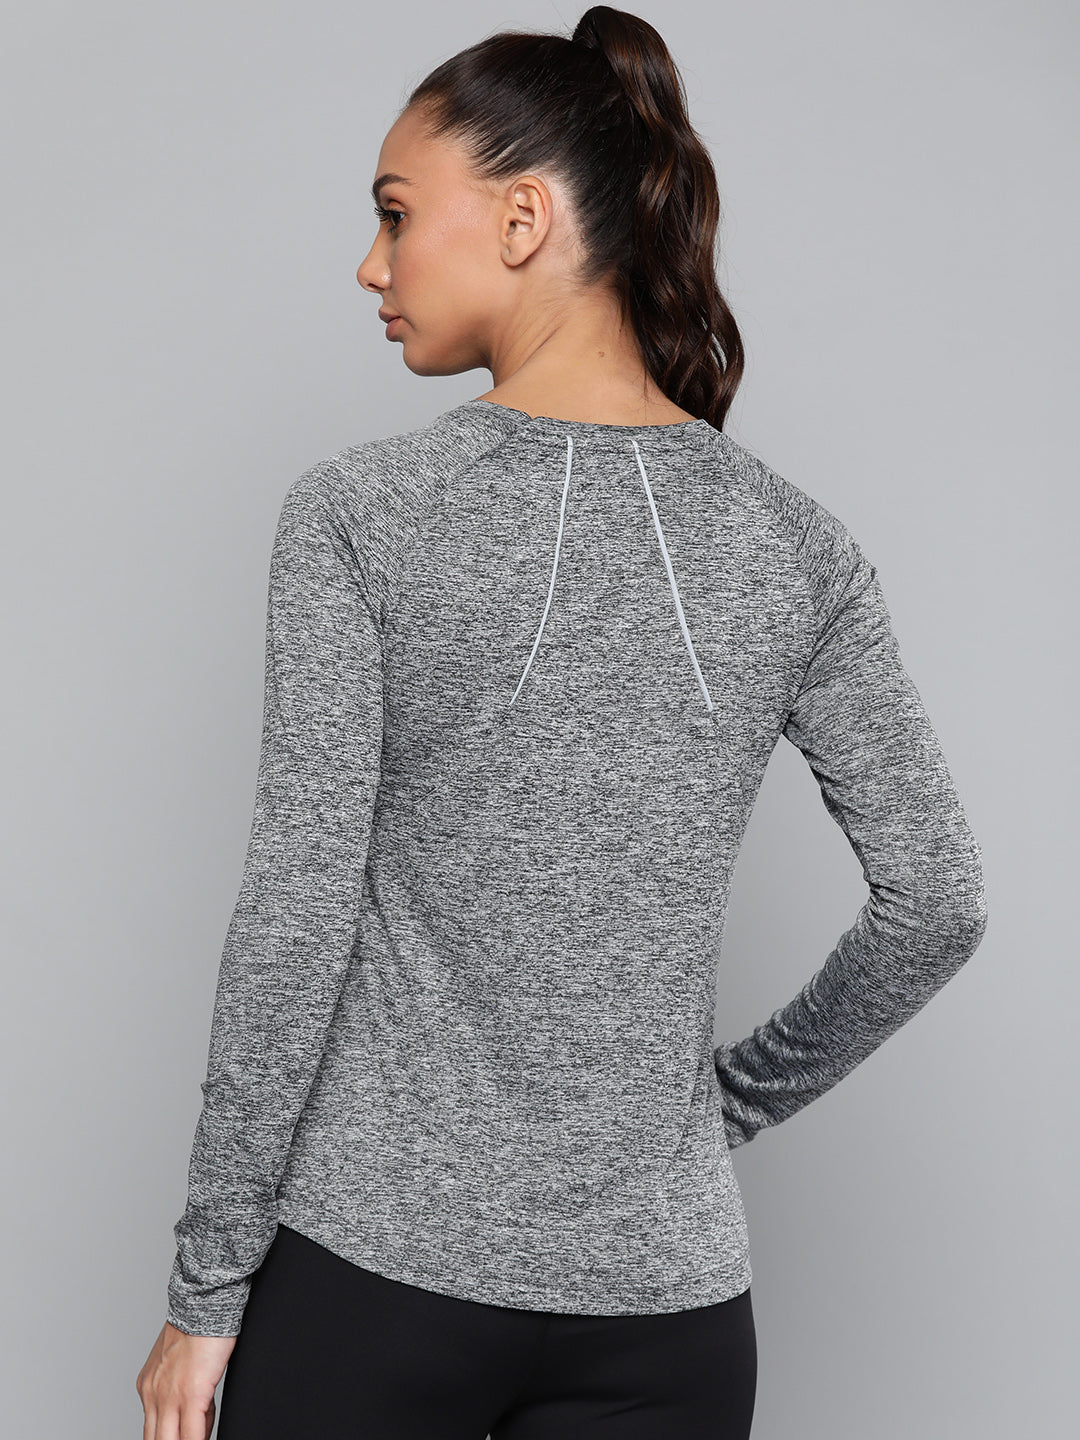 Alcis Women Grey Slim Fit Training or Gym T-shirt